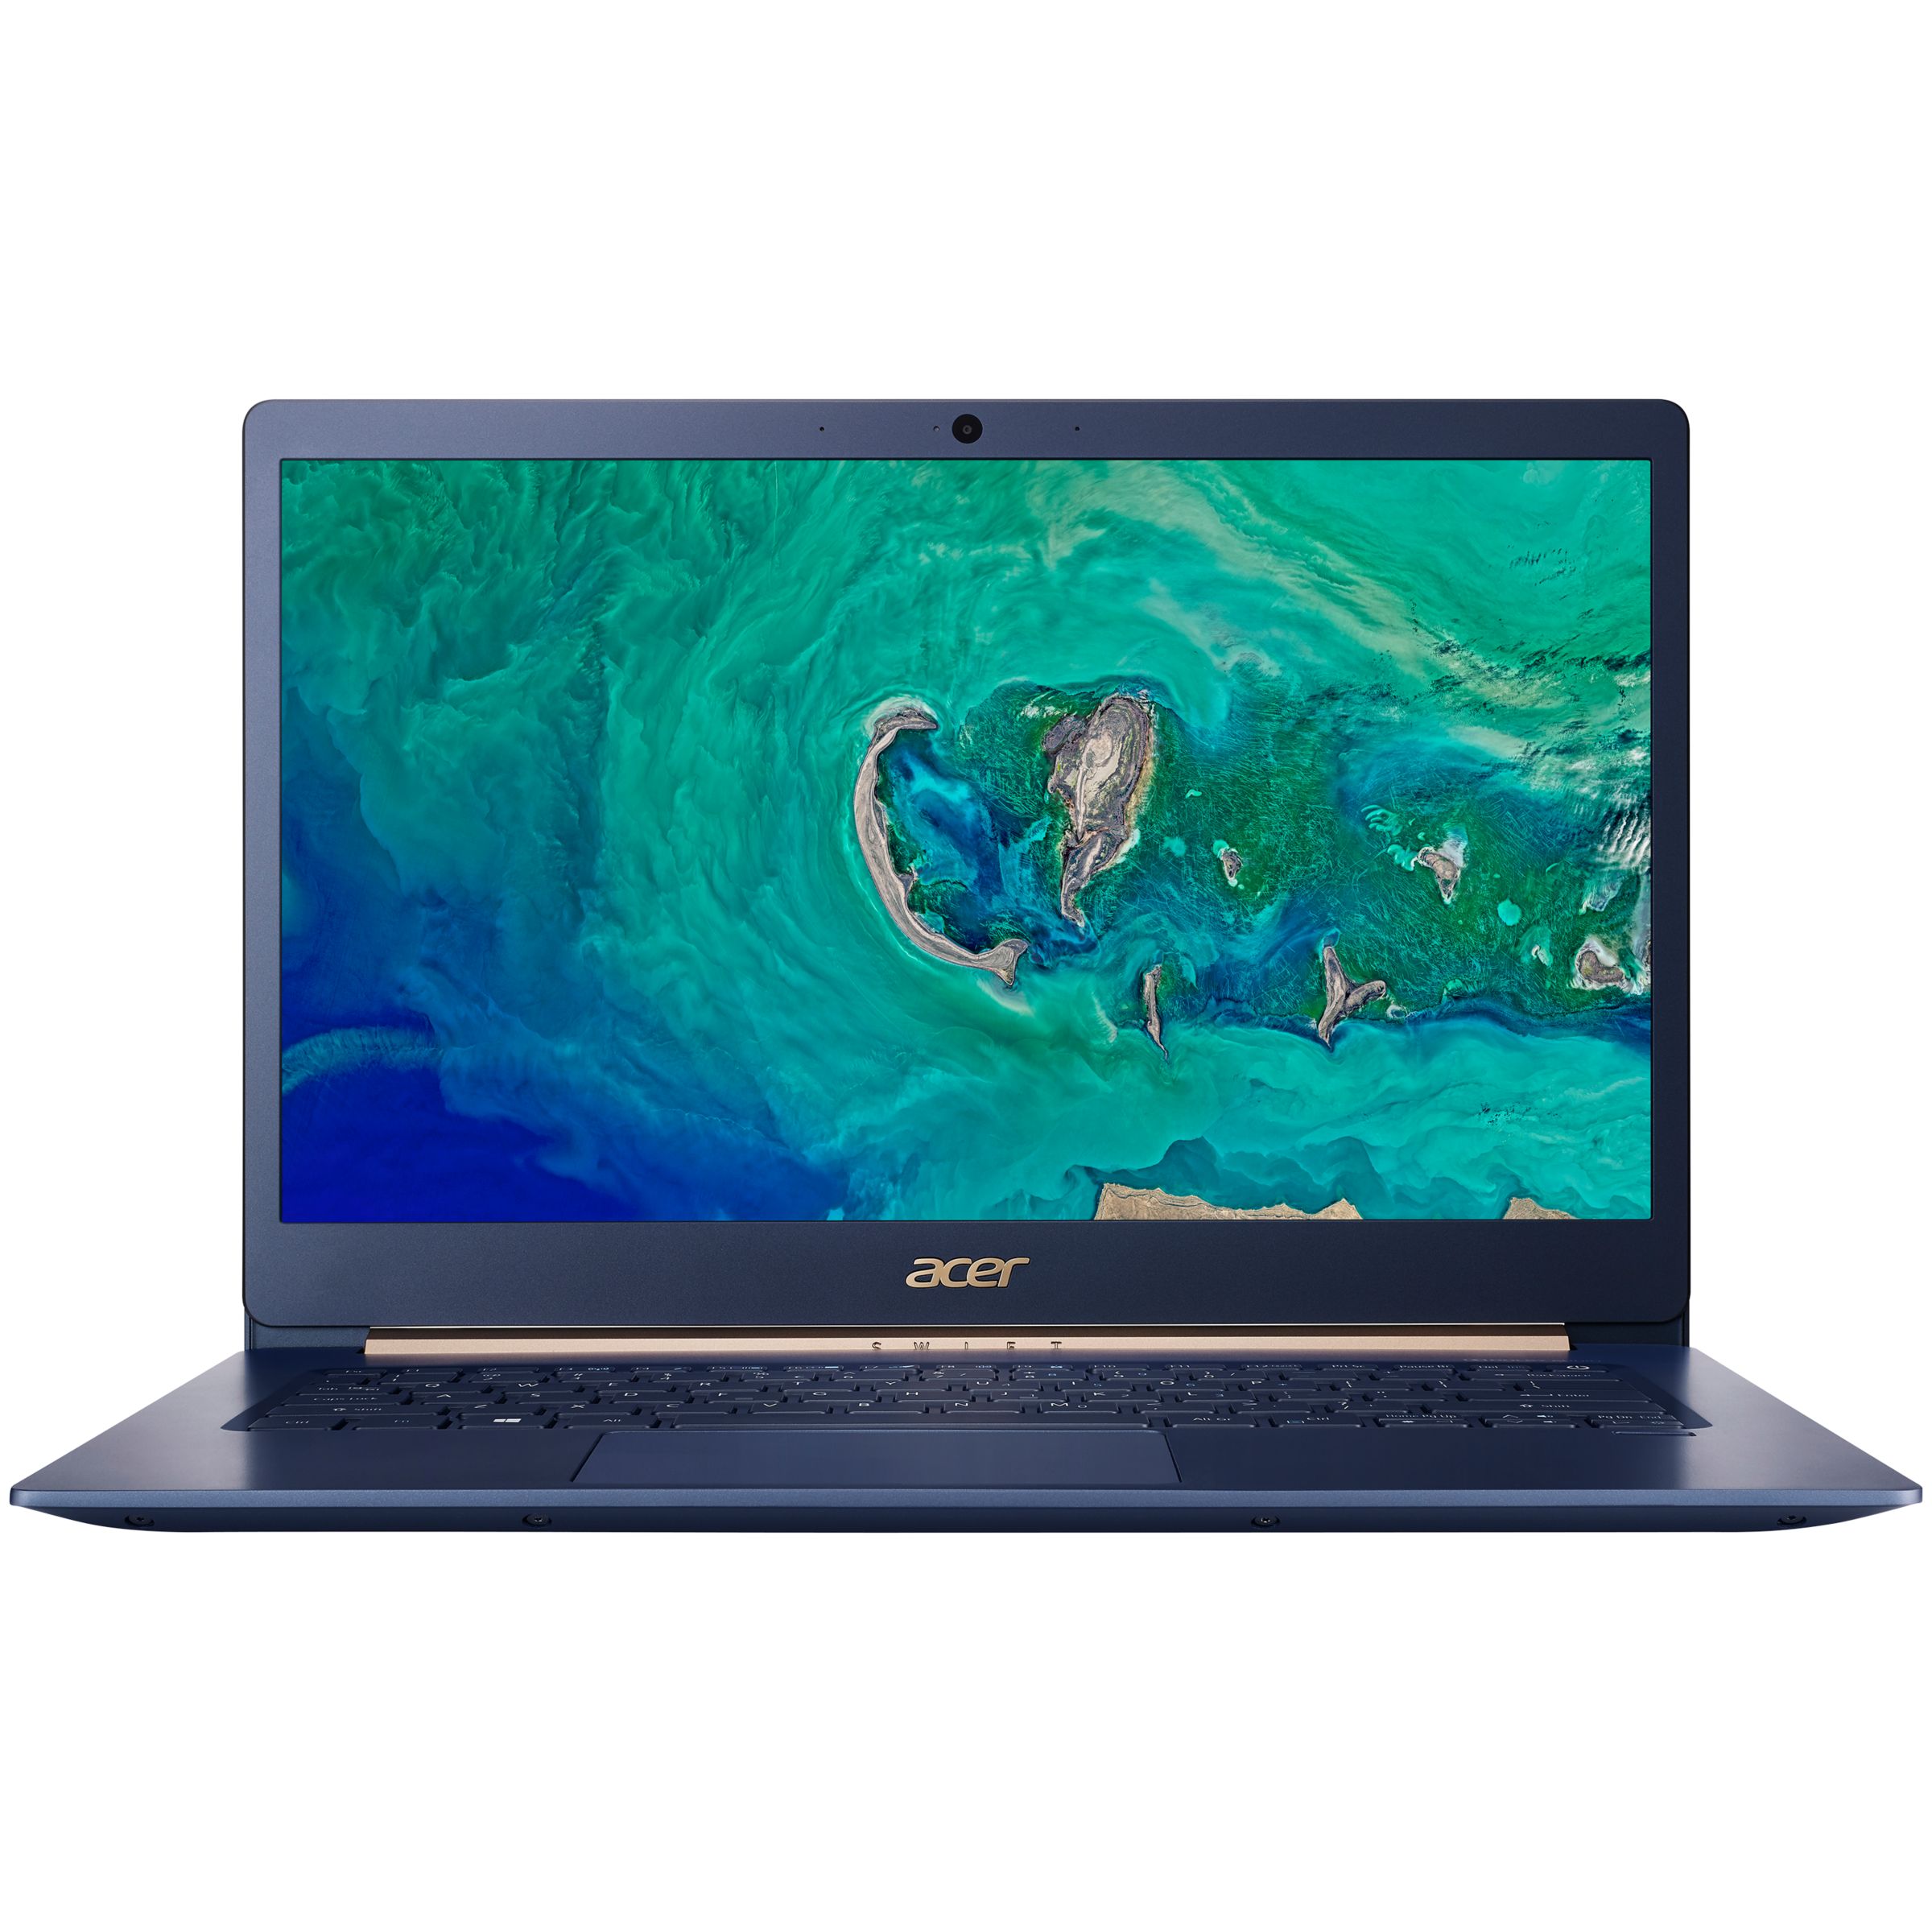 Acer Swift 5 SF514-52T Laptop, Intel Core i7, 8GB RAM, 512GB SSD, 14.0 Touchscreen, Charcoal Blue